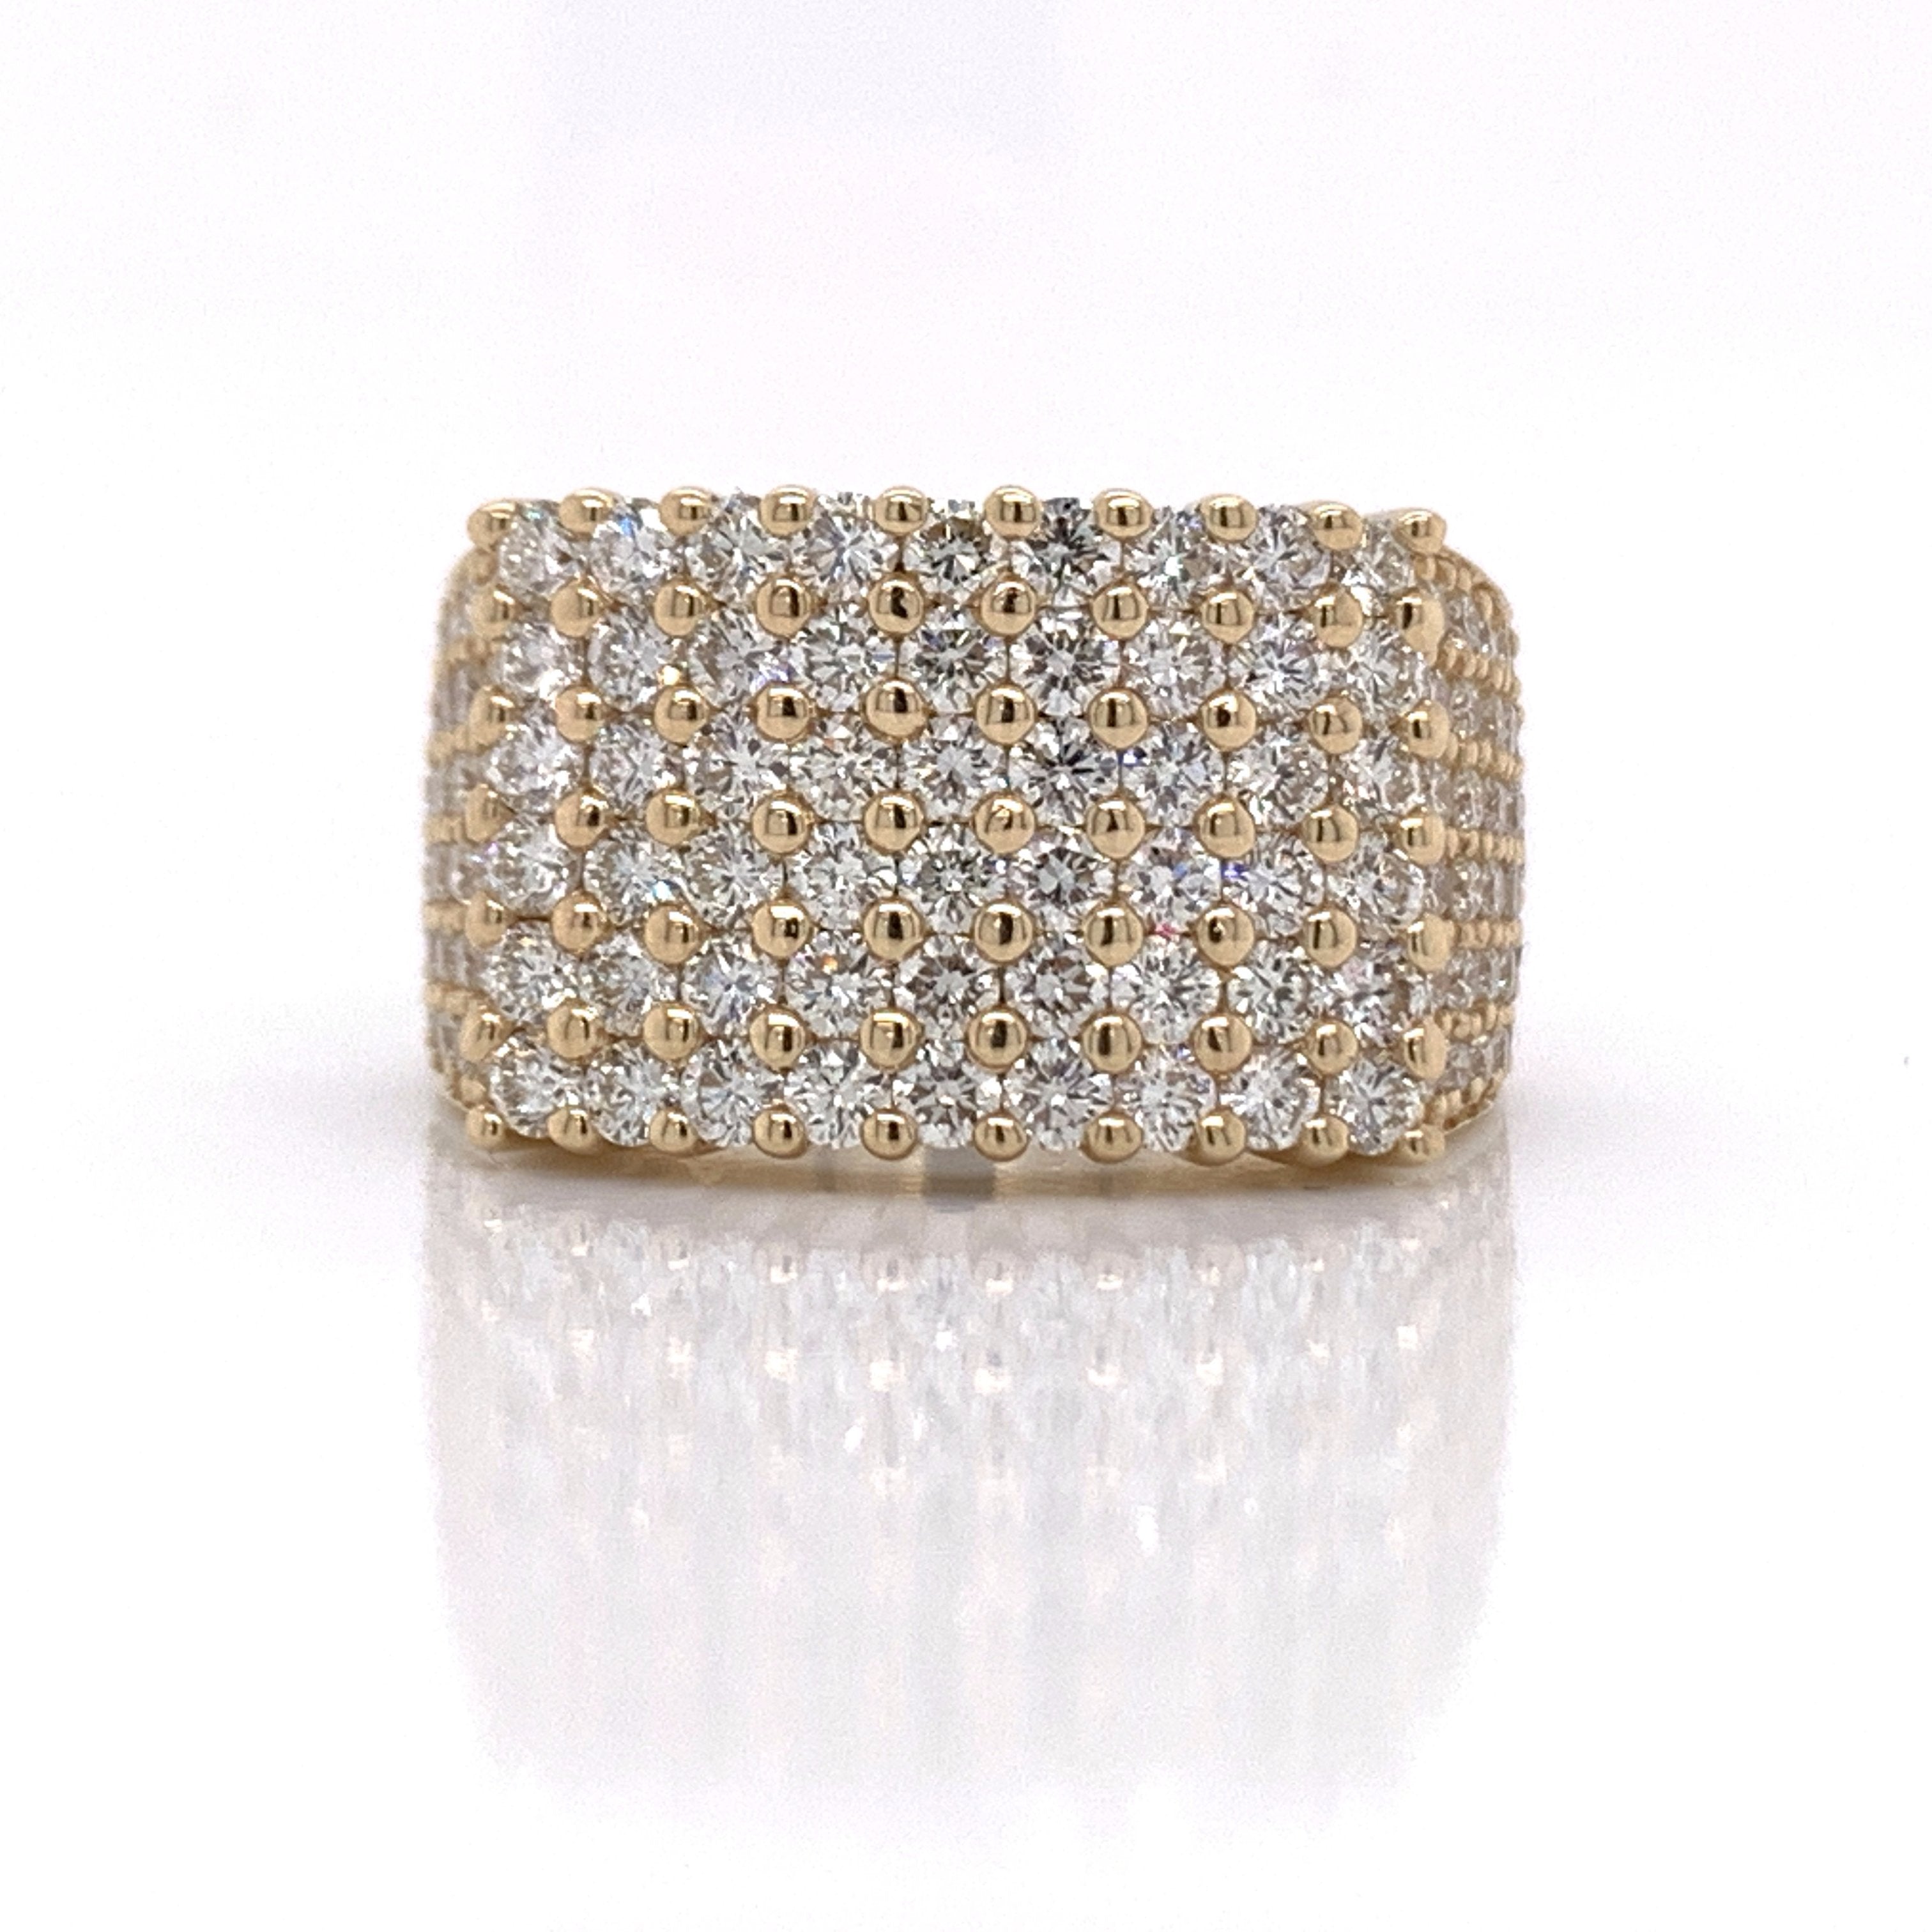 3.75CT Diamond 14K Gold Ring - White Carat Diamonds 